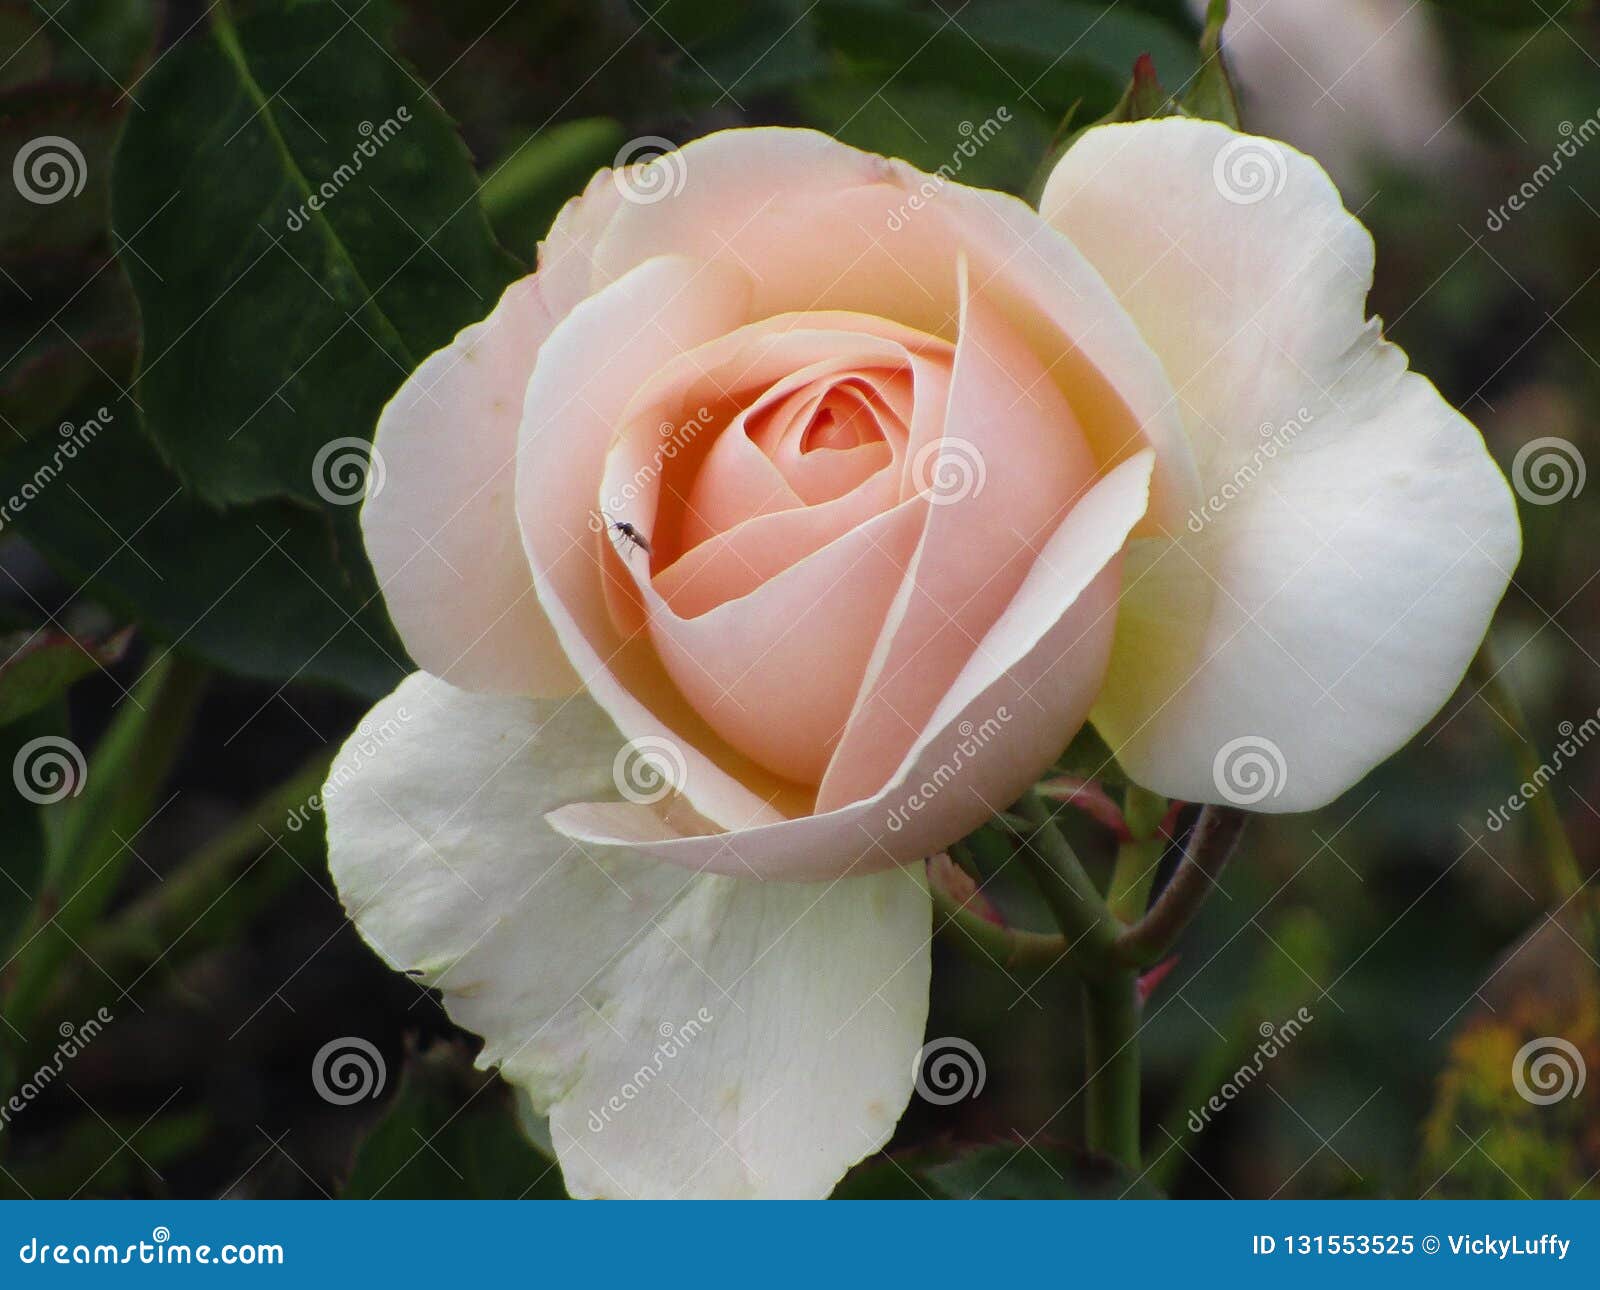 sweet pretty rose